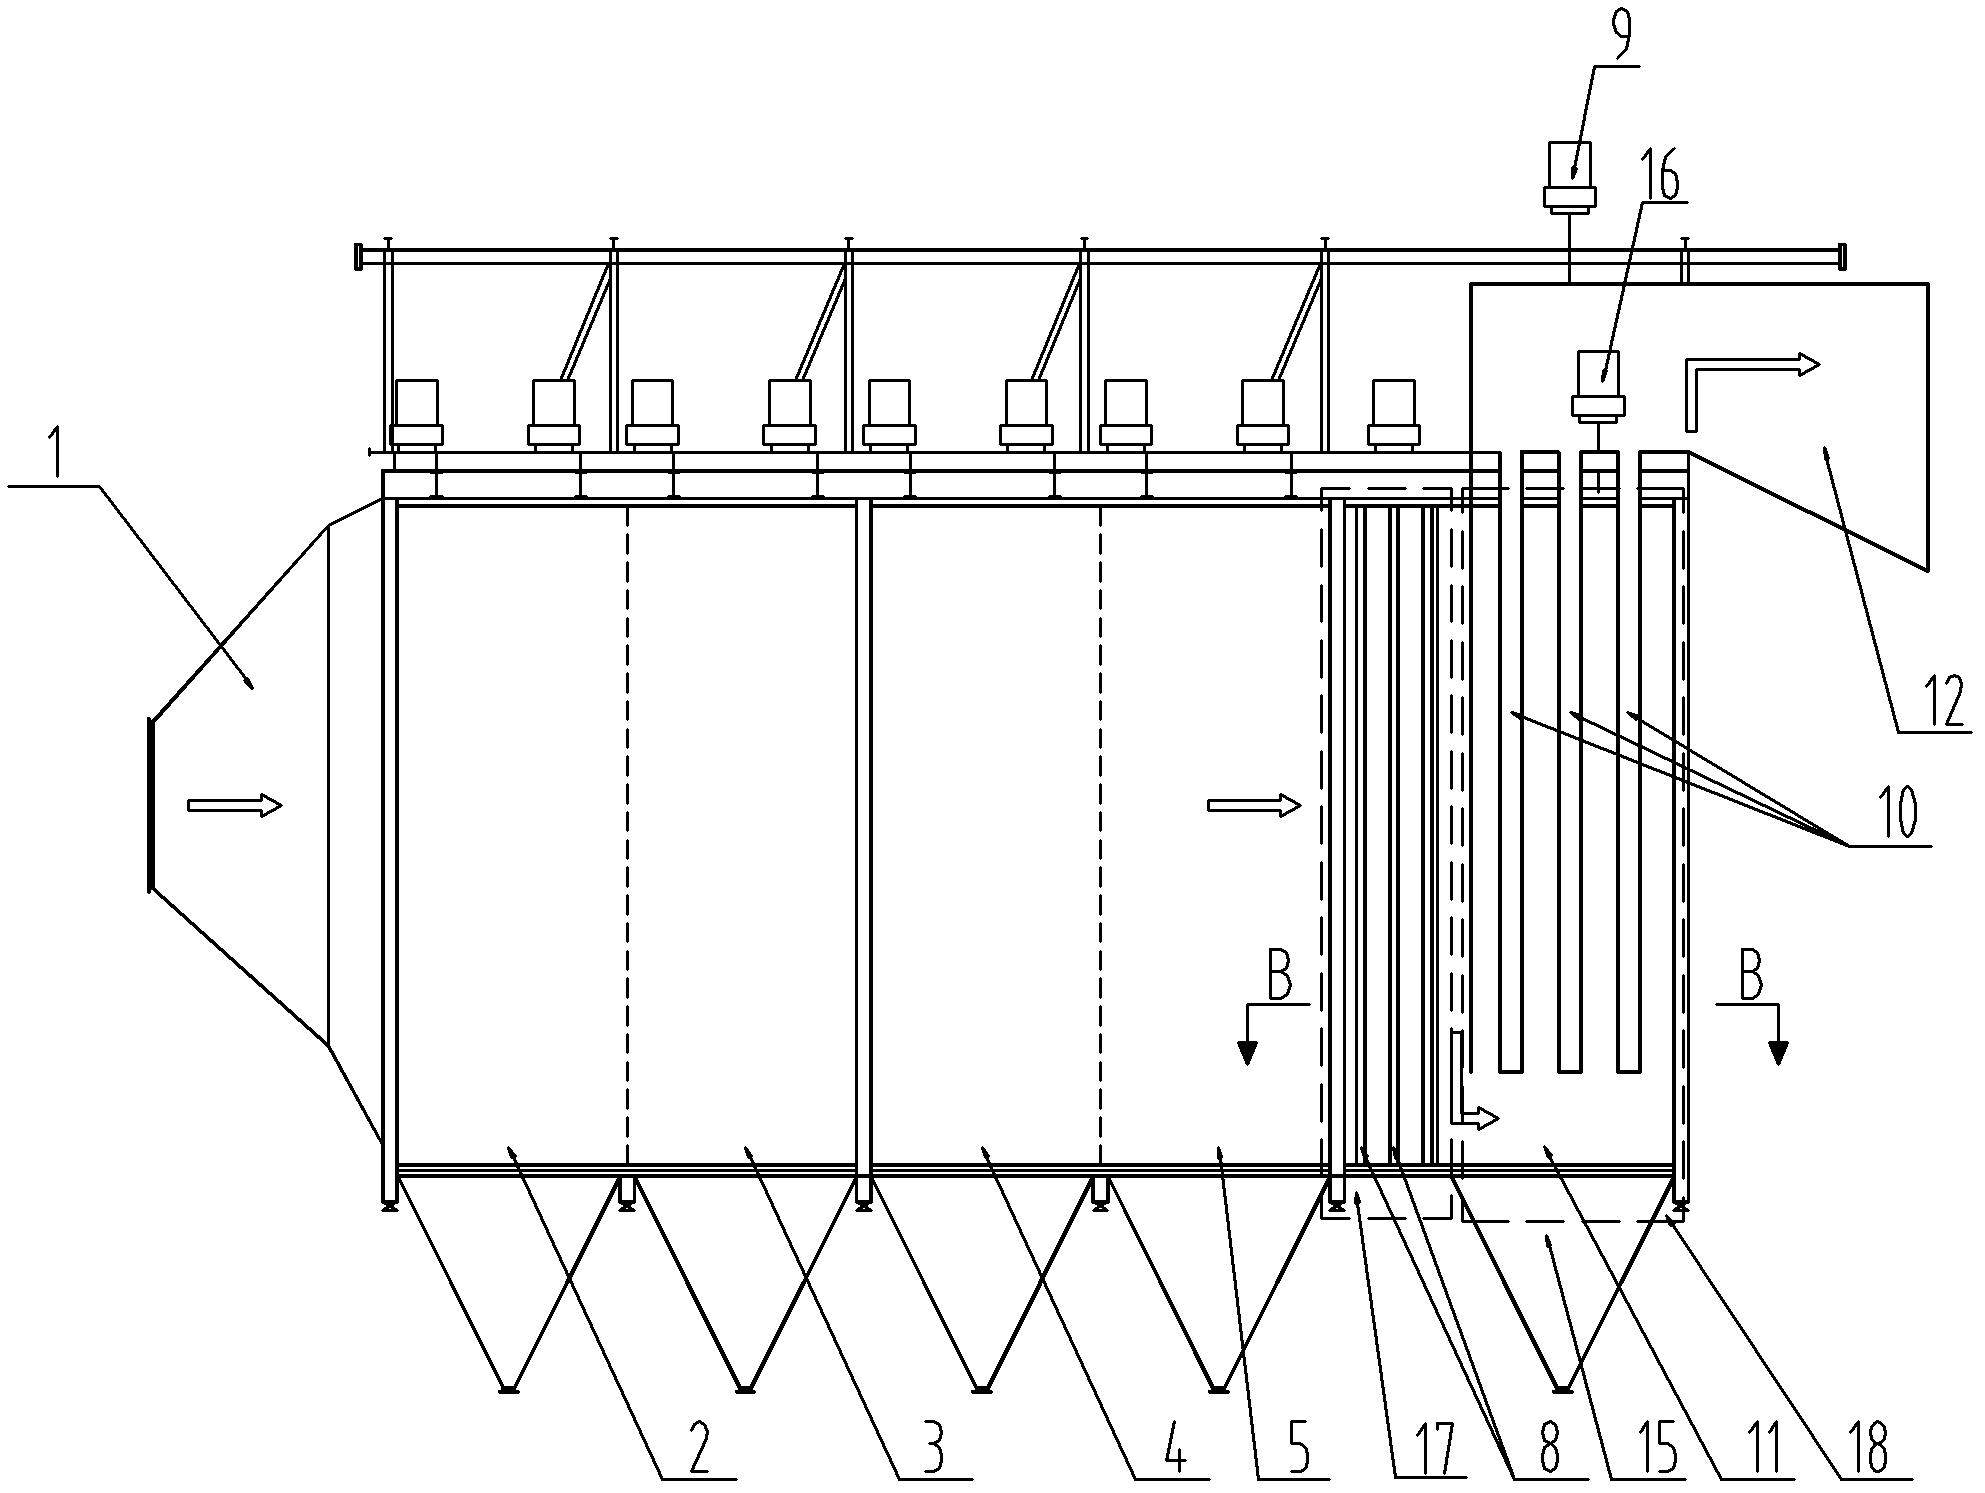 PM2.5 (Particulate Matter 2.5) electrostatic precipitator with box-type dedusting area